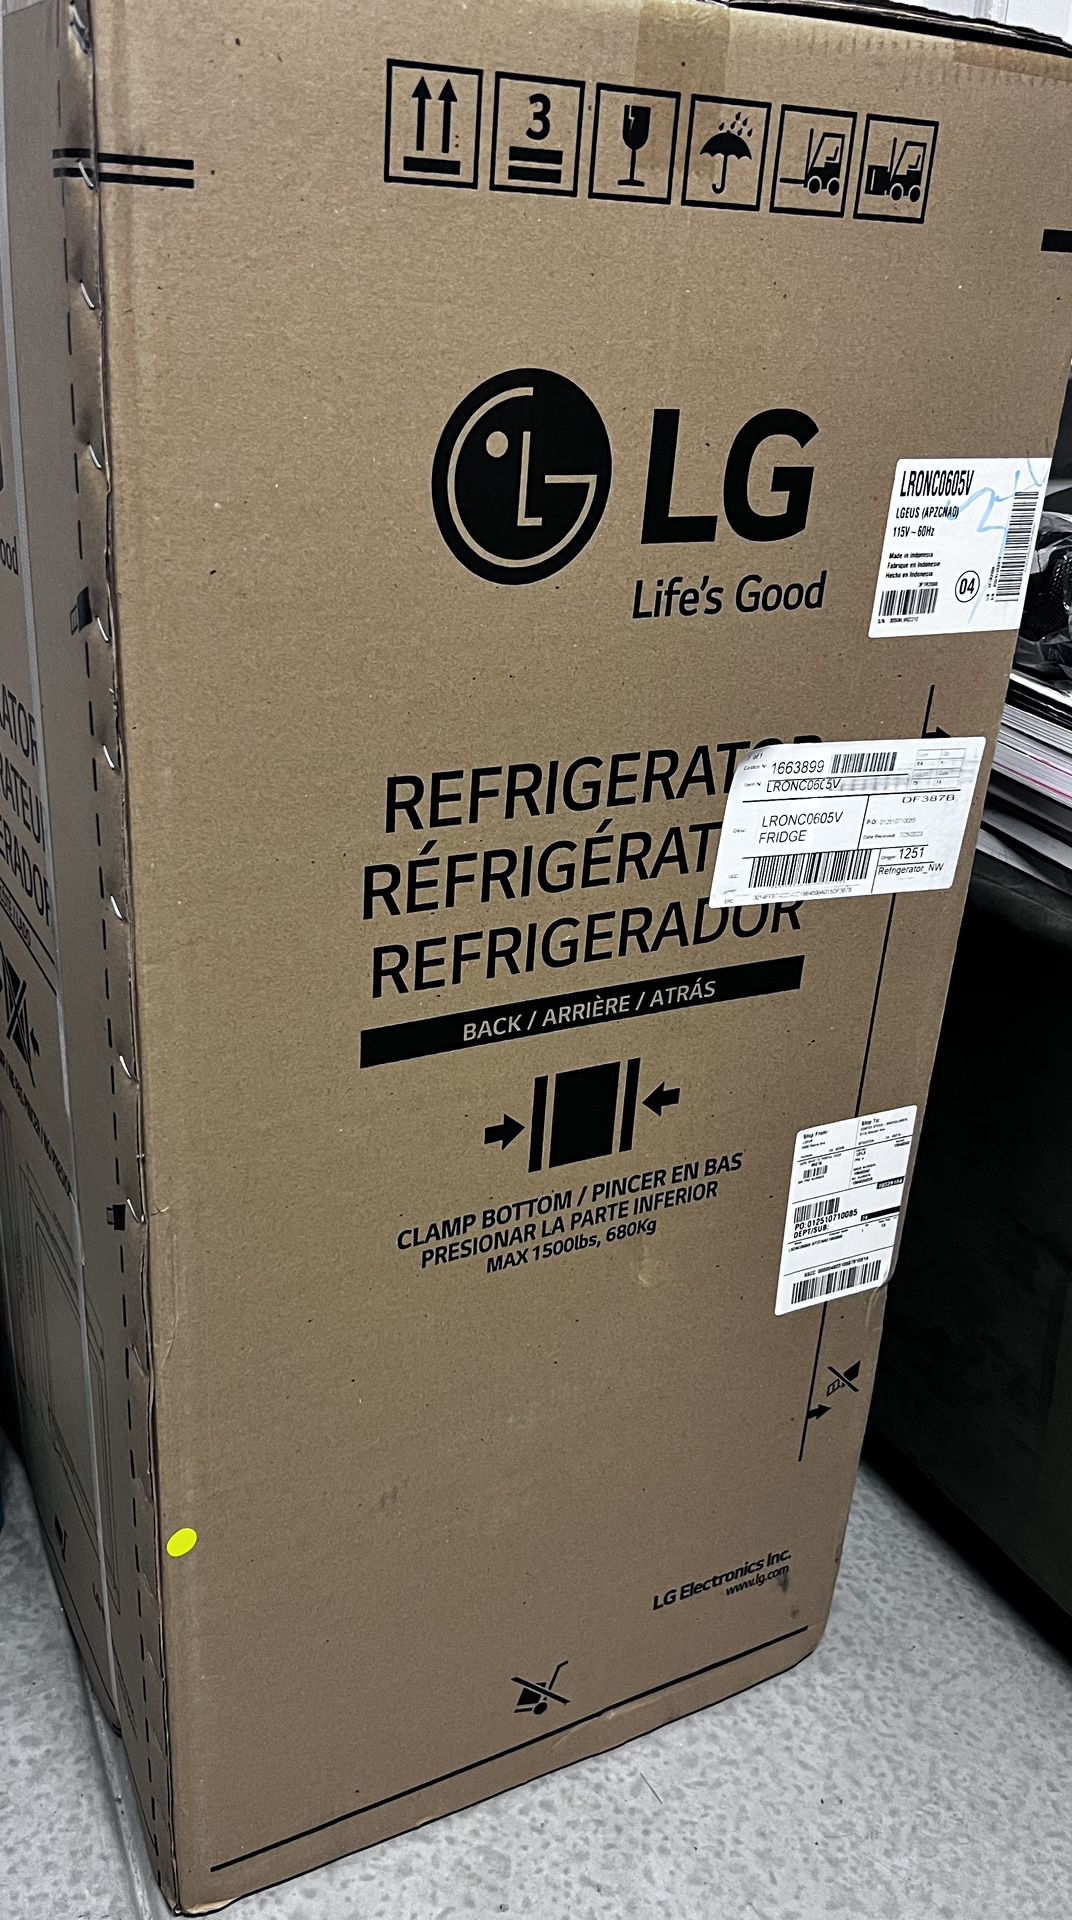 LG 6.0 cu. ft. Single Door Refrigerator in the box